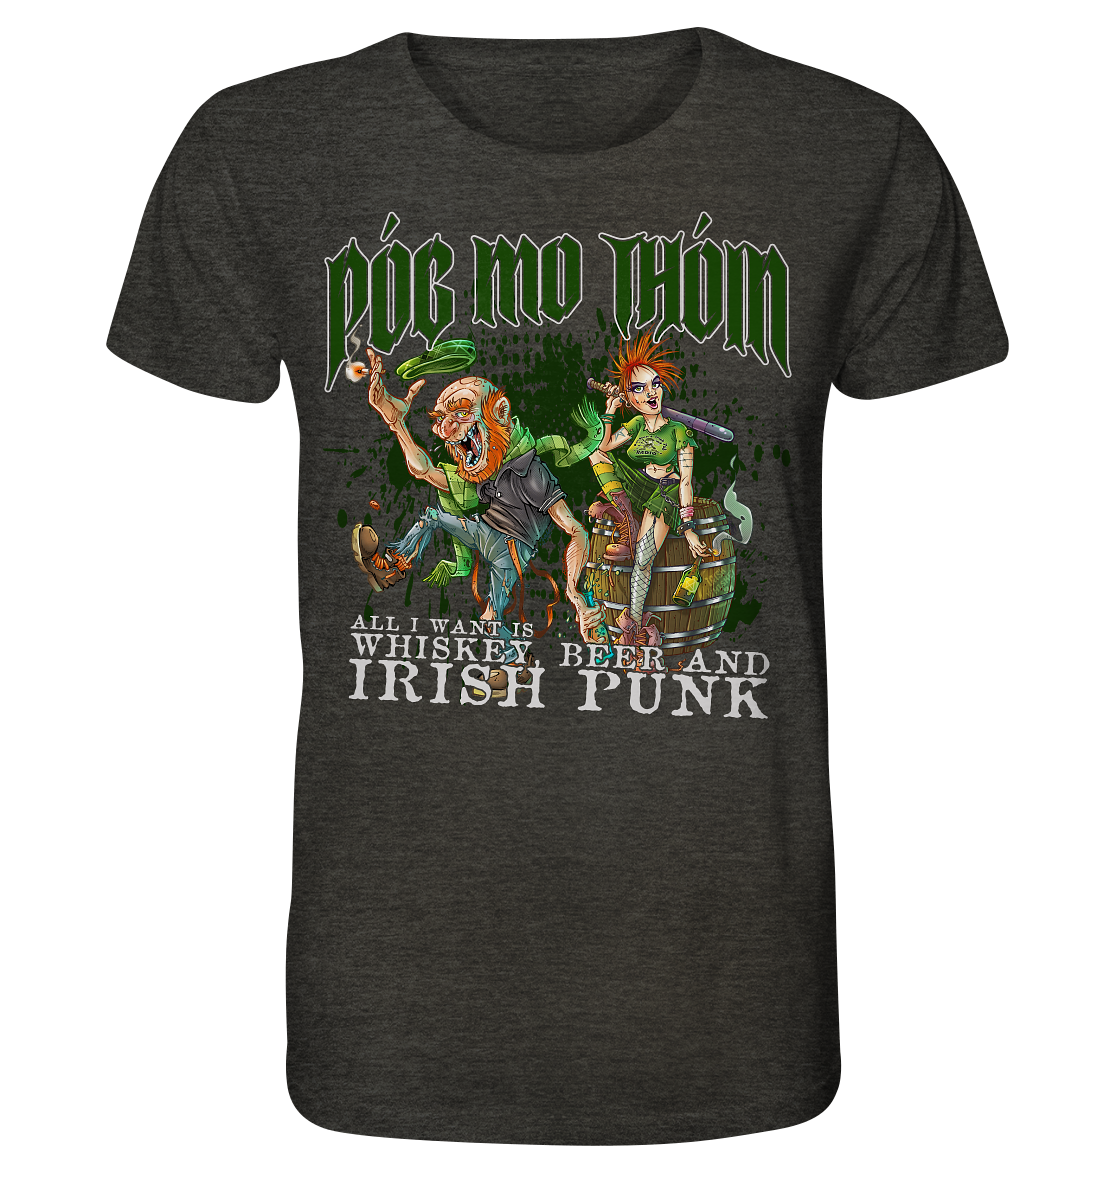 Póg Mo Thóin Streetwear "Whiskey, Beer and Irish Punk" - Organic Shirt (meliert)